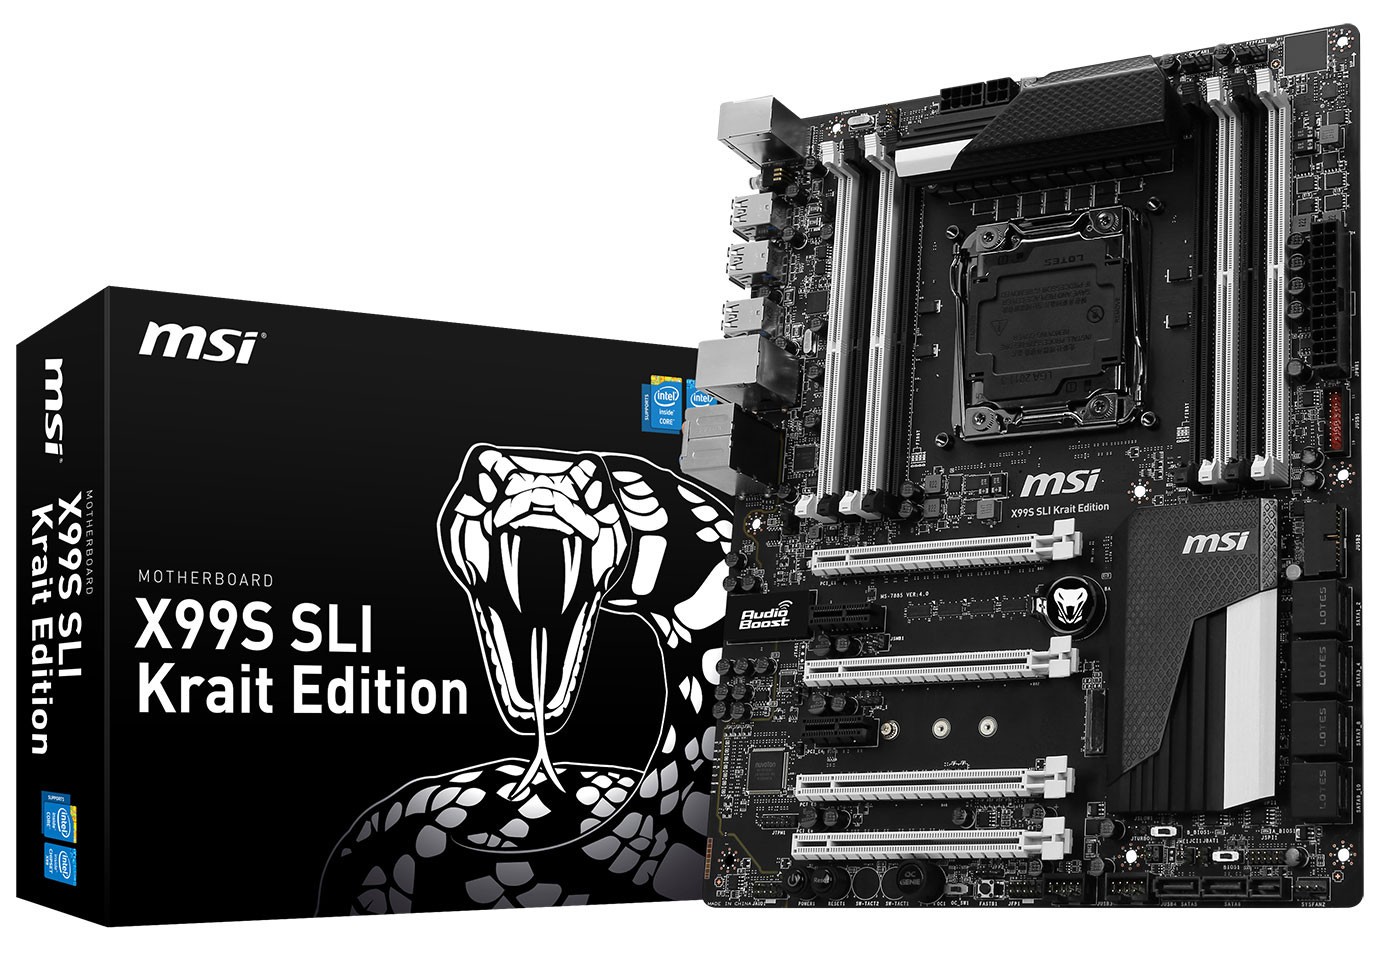 CES 2015: Black and White MSI X99S SLI Krait Edition Super Motherboard